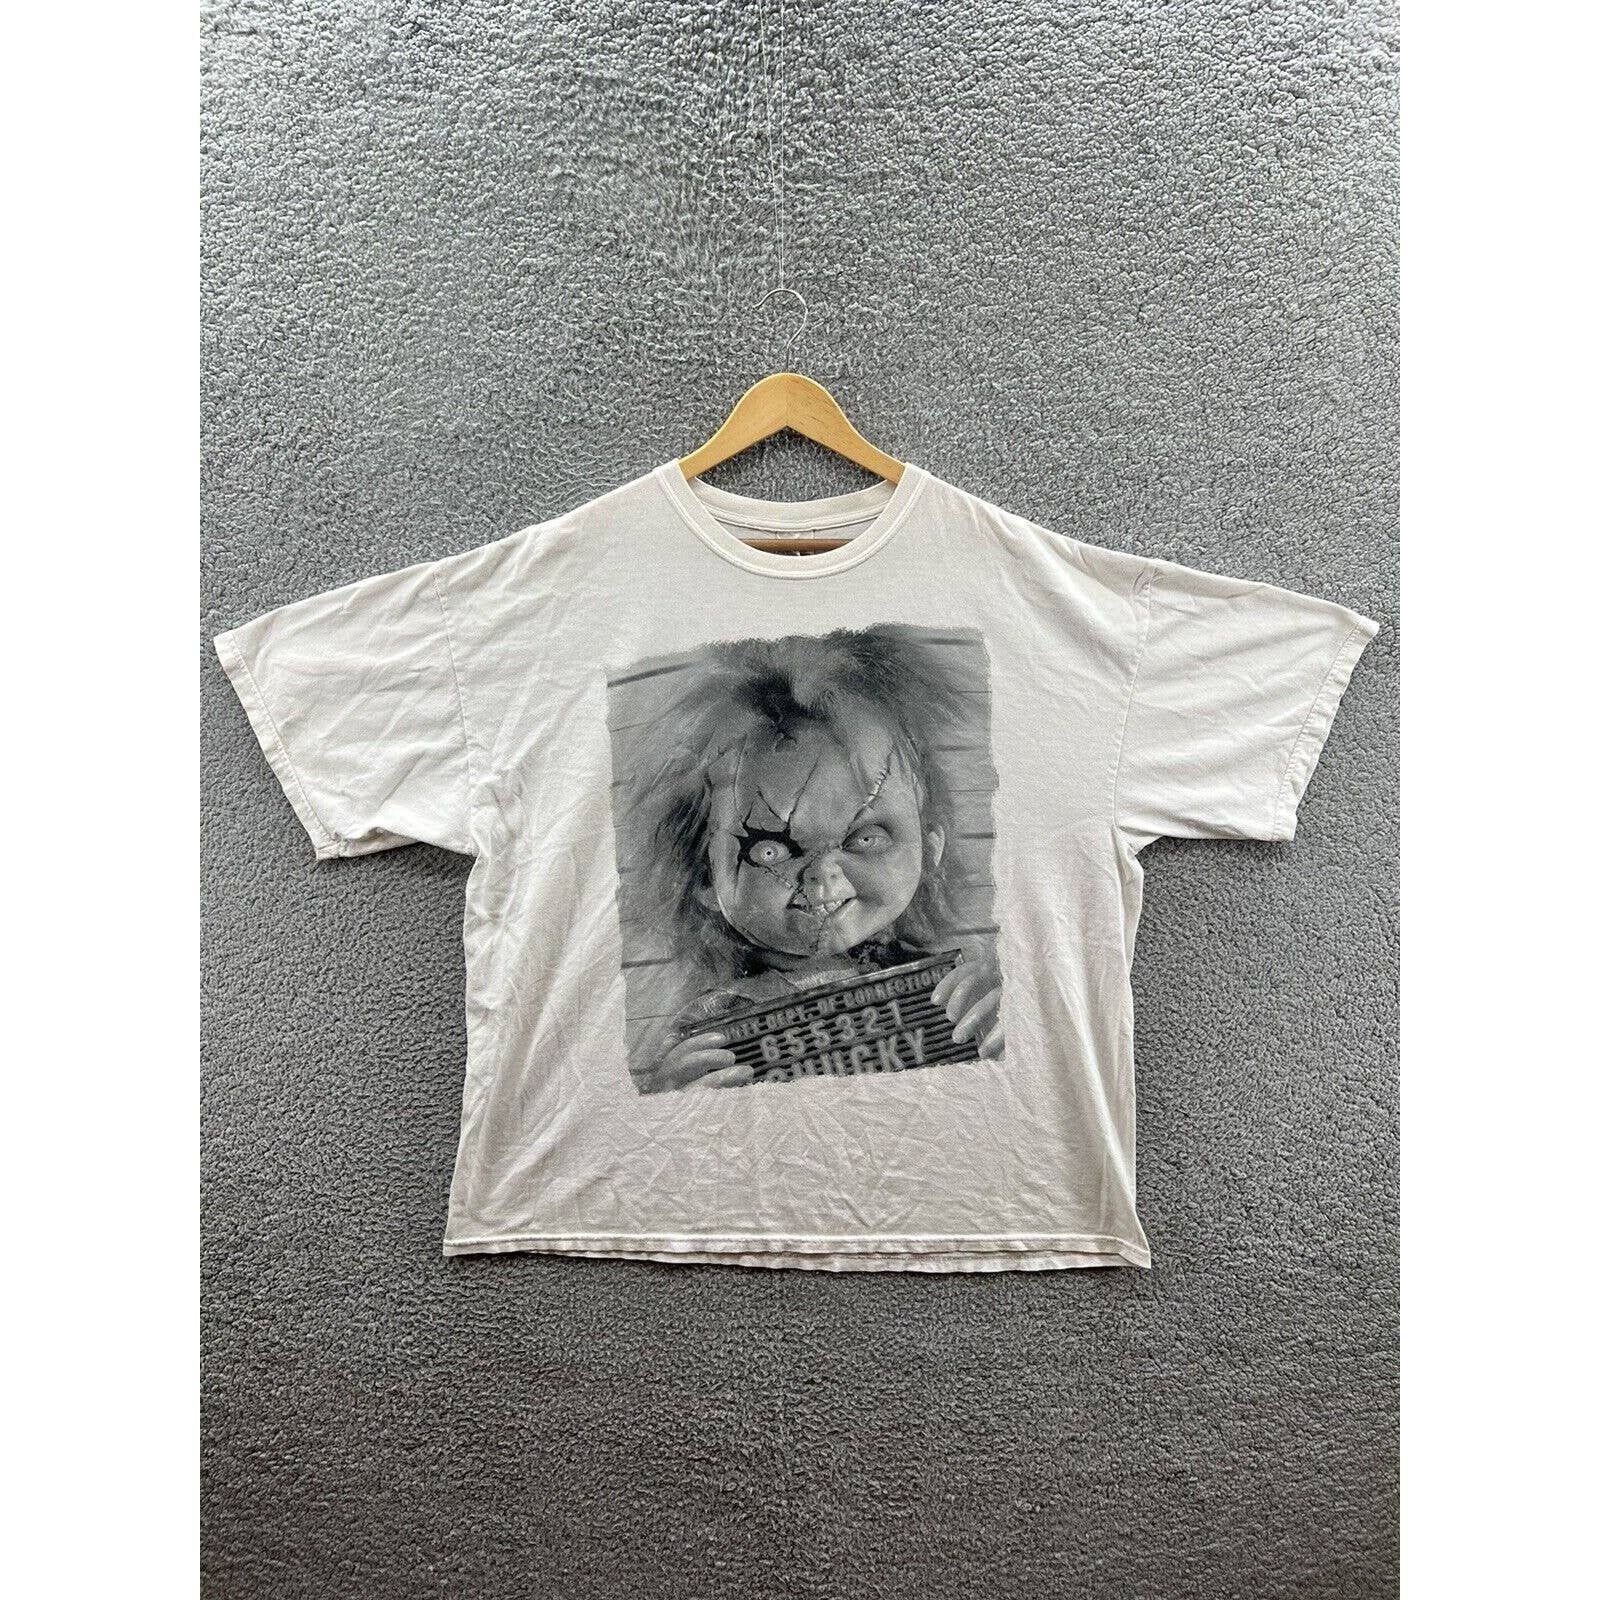 Gildan Gildan Vintage Chunky Movie Horror Corrections T-Shirt XXL Size US XXL / EU 58 / 5 - 1 Preview